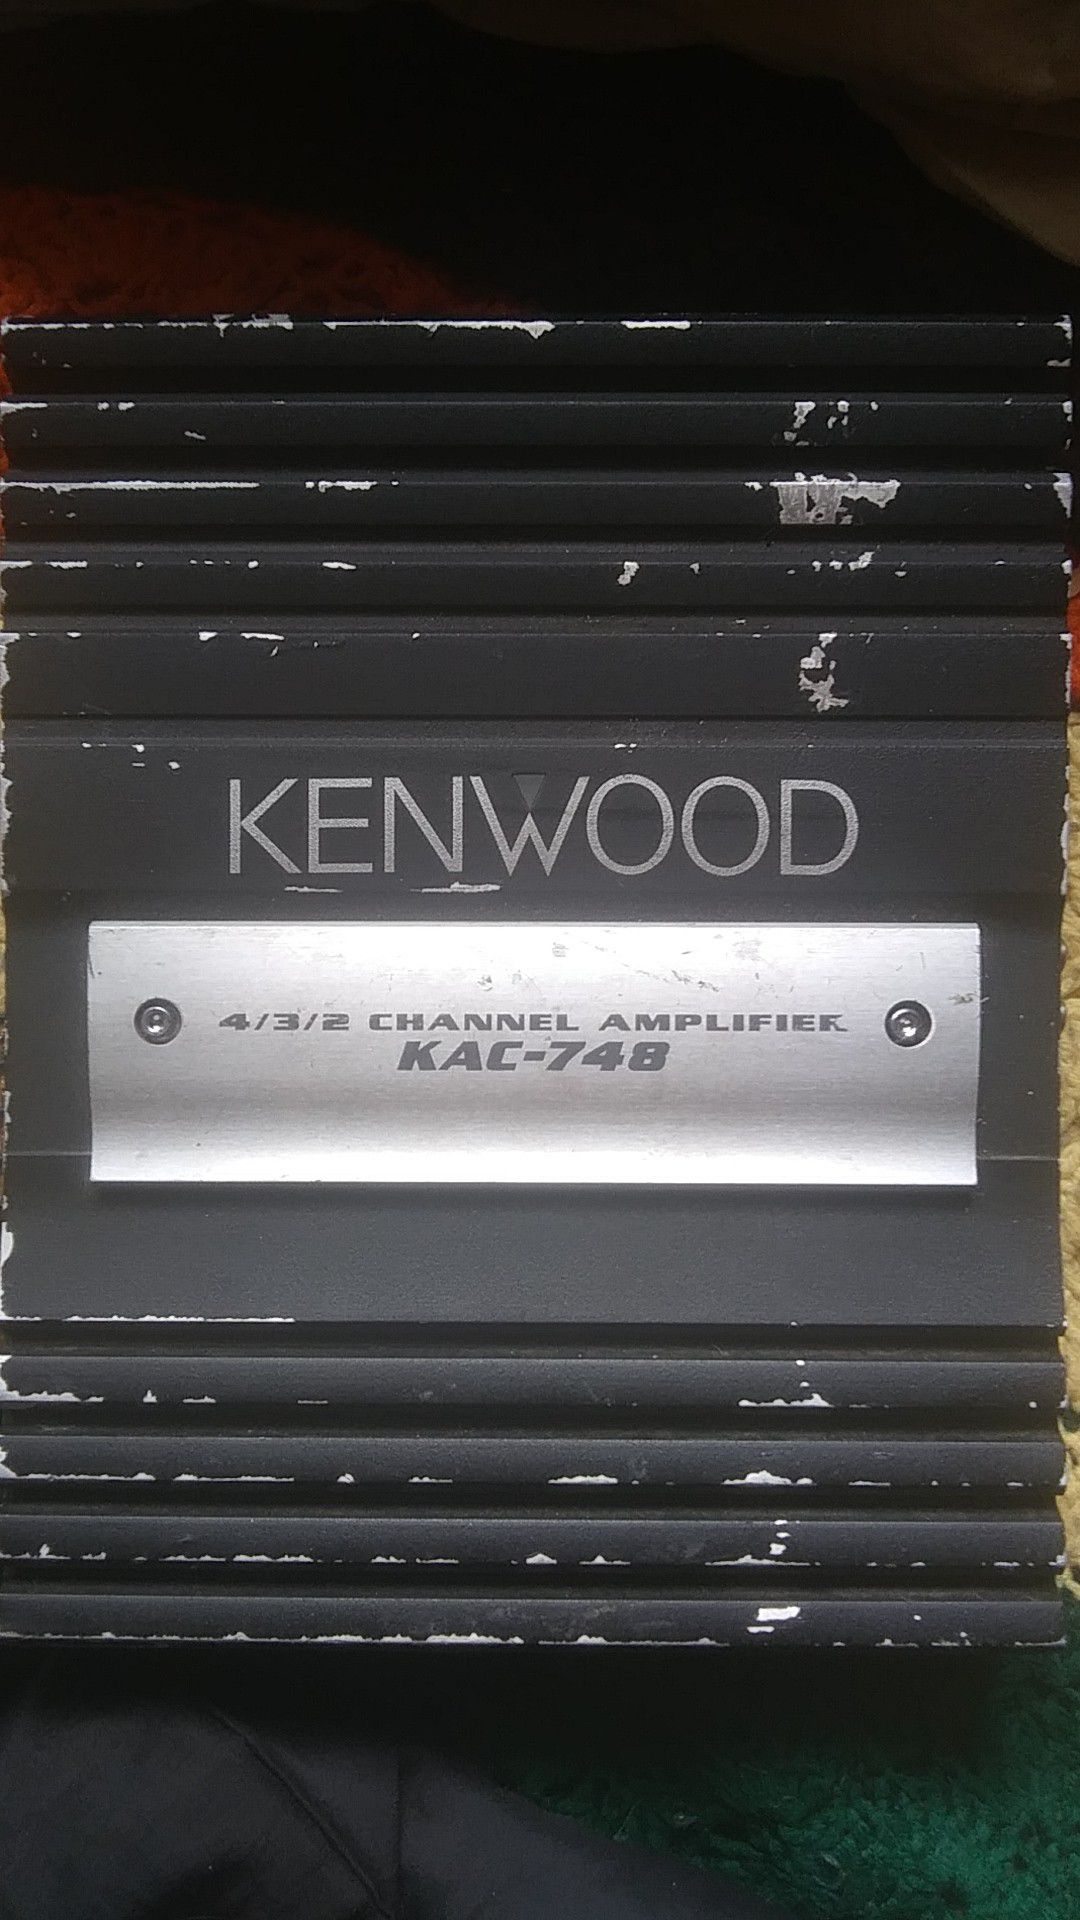 Kenwood amplifier